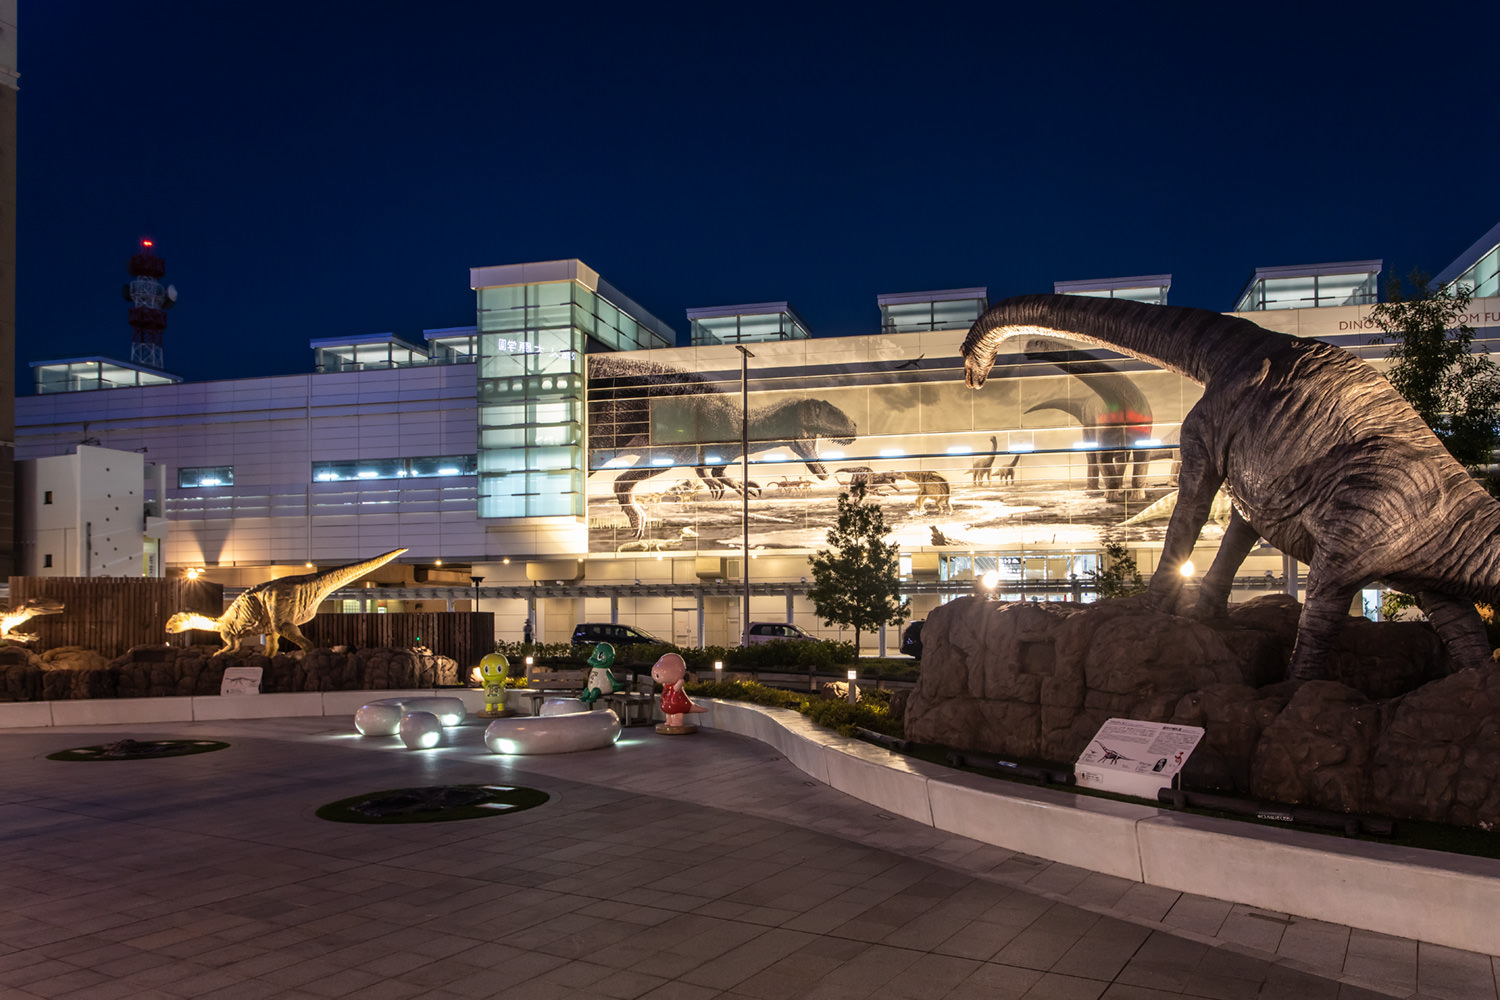 Fukui Station Dinosaur Plaza